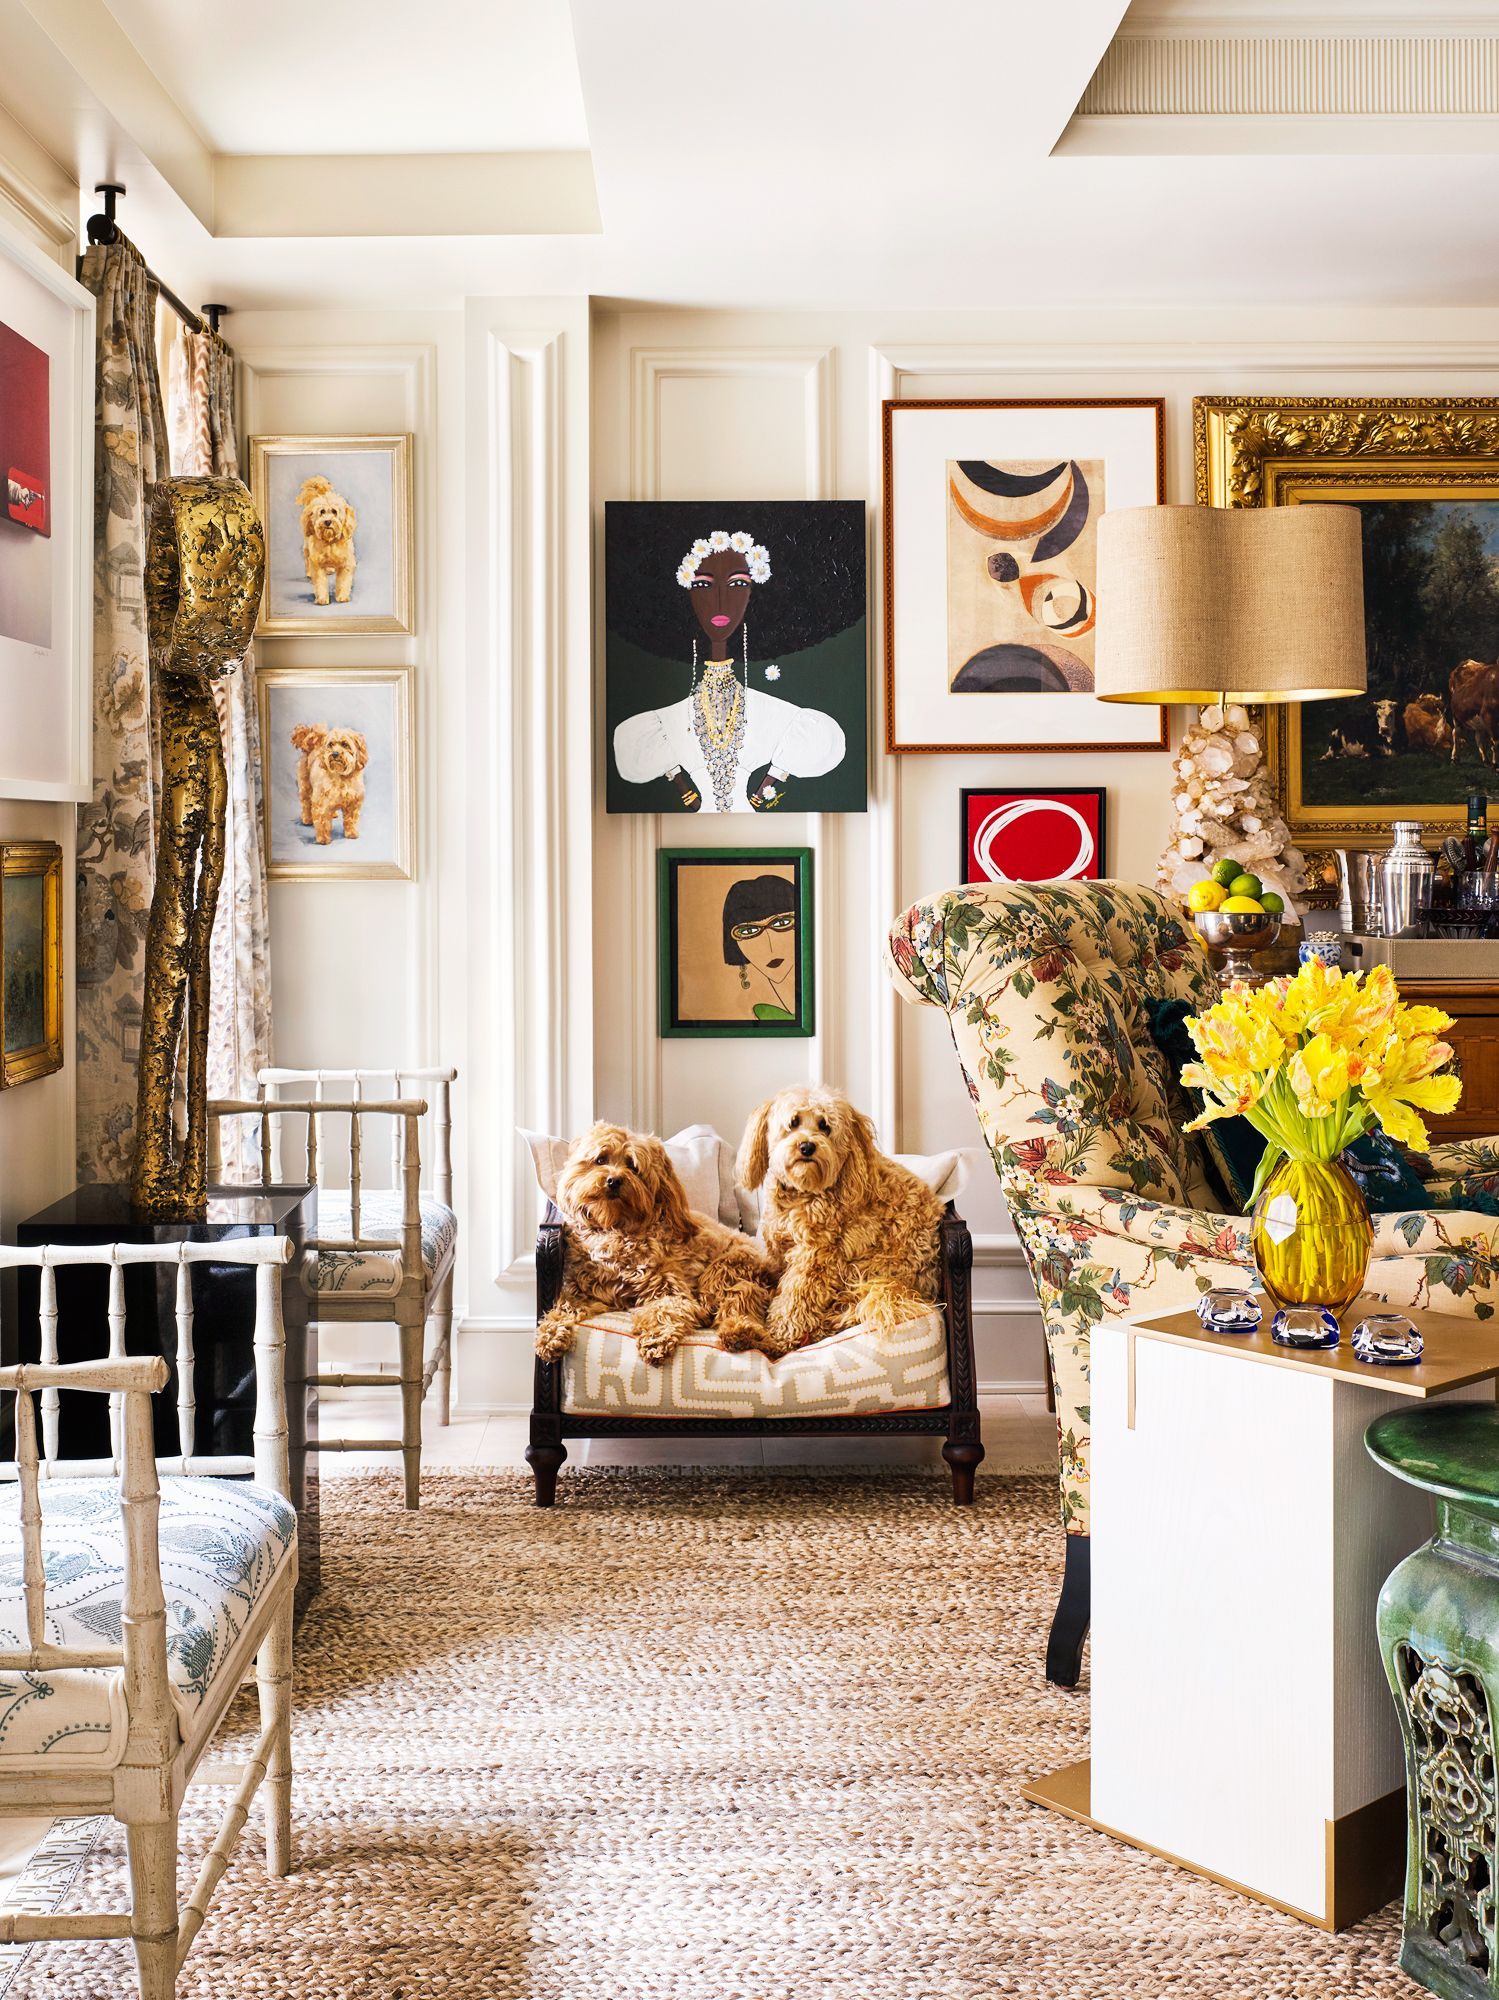 40 Best Living Room Decorating Ideas Designs HouseBeautifulcom